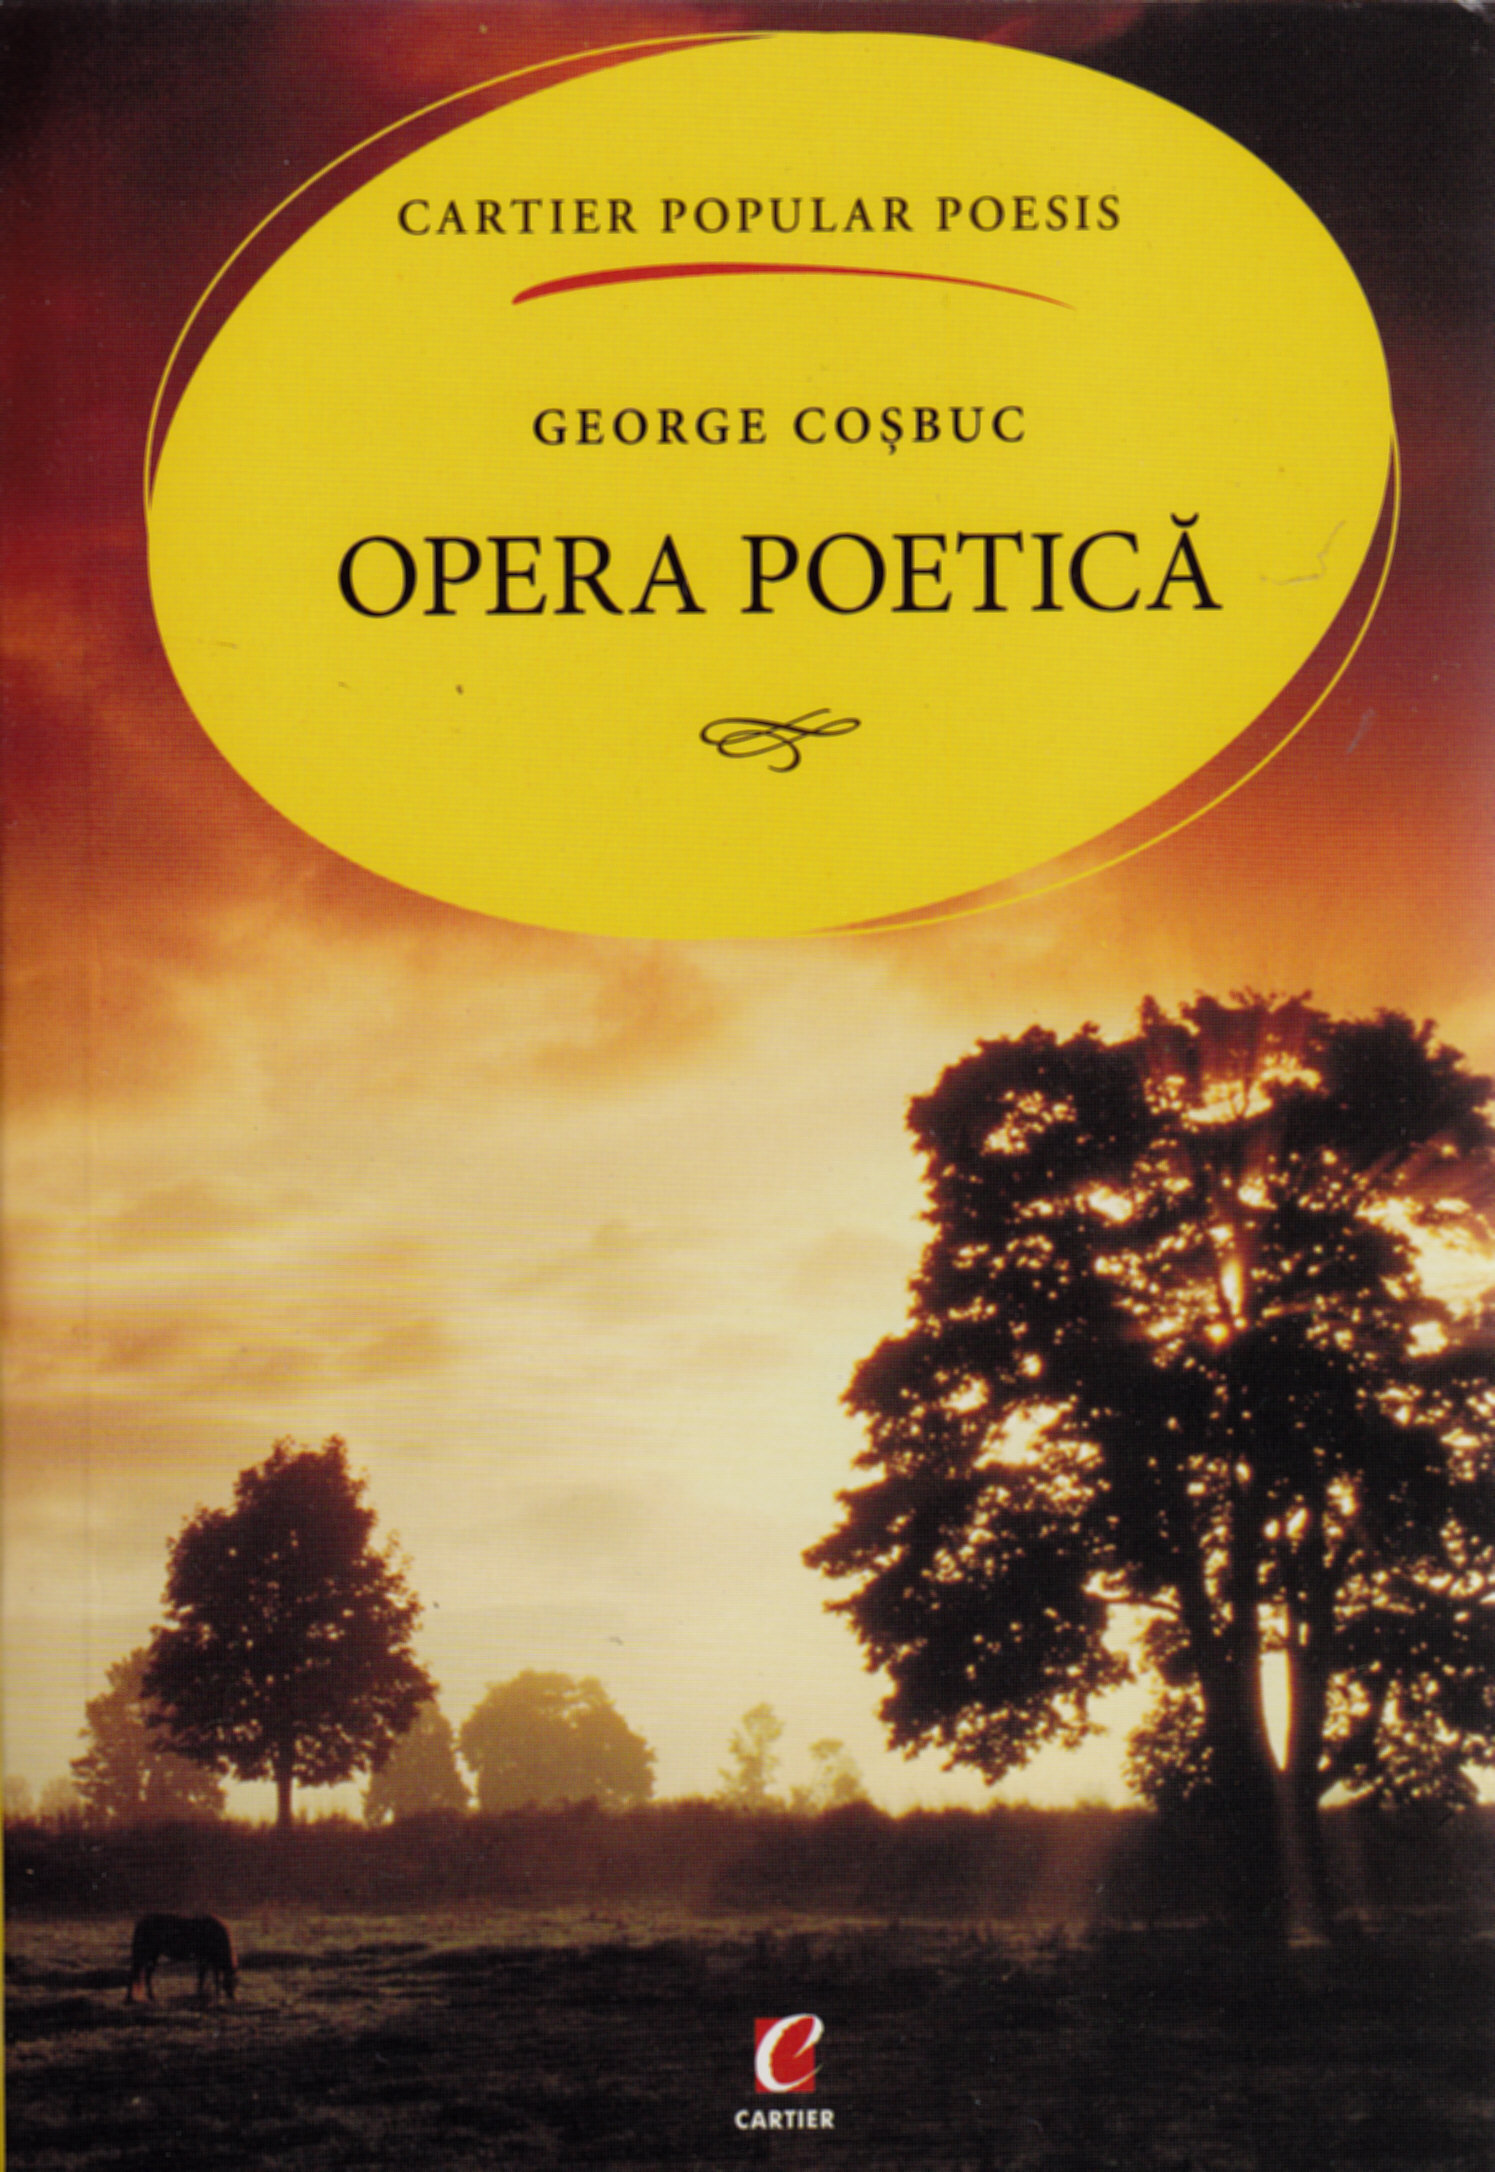 Opera poetica - George Cosbuc - Popular